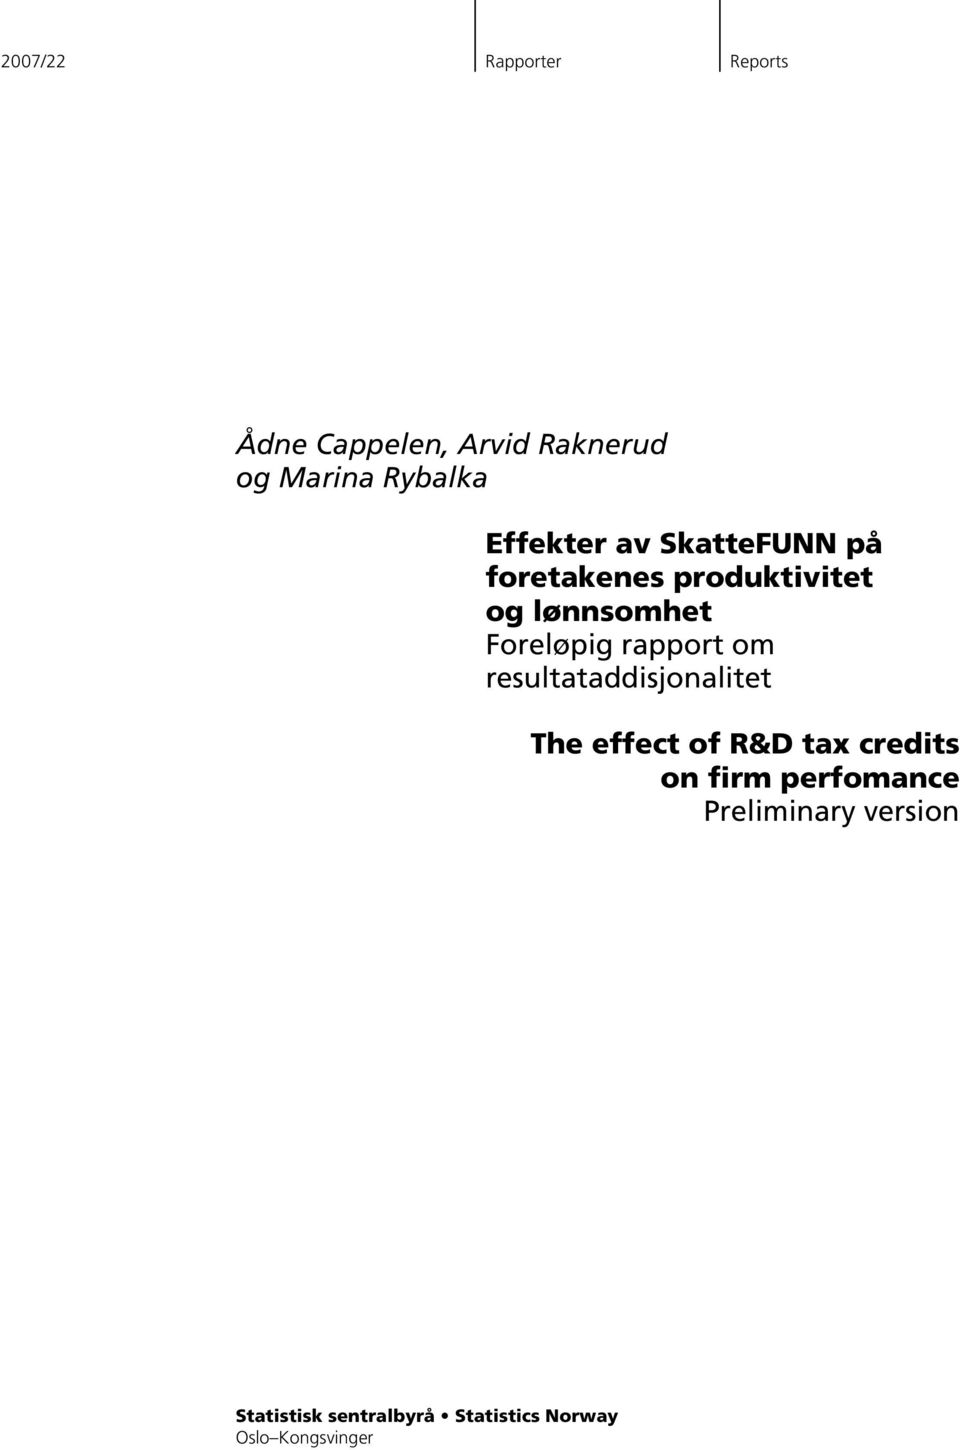 rapport om resultataddisjonalitet The effect of R&D tax credits on firm